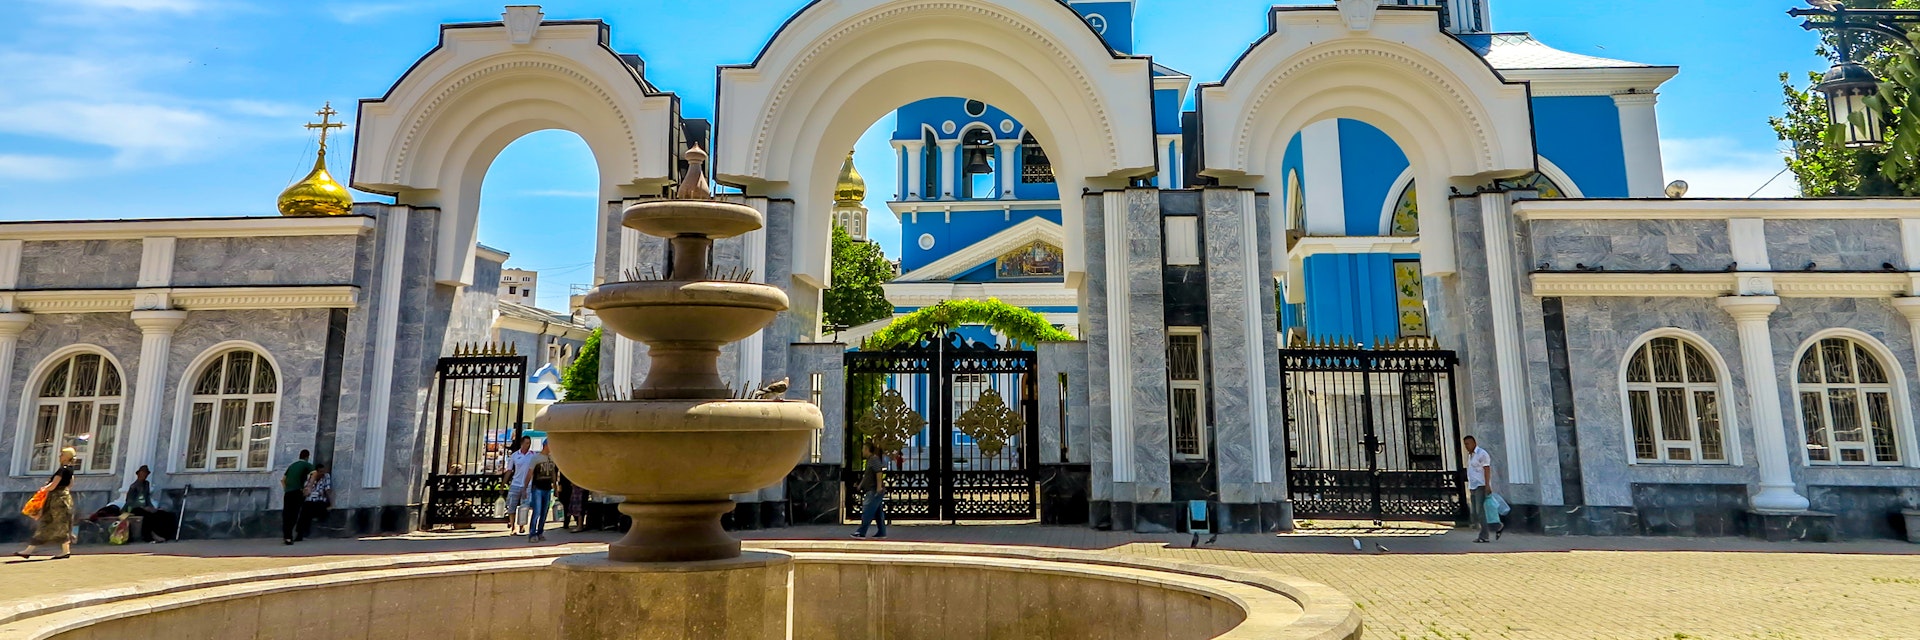 Entrance to Assumption Cathedral in Tashkent, Uzbekistan.